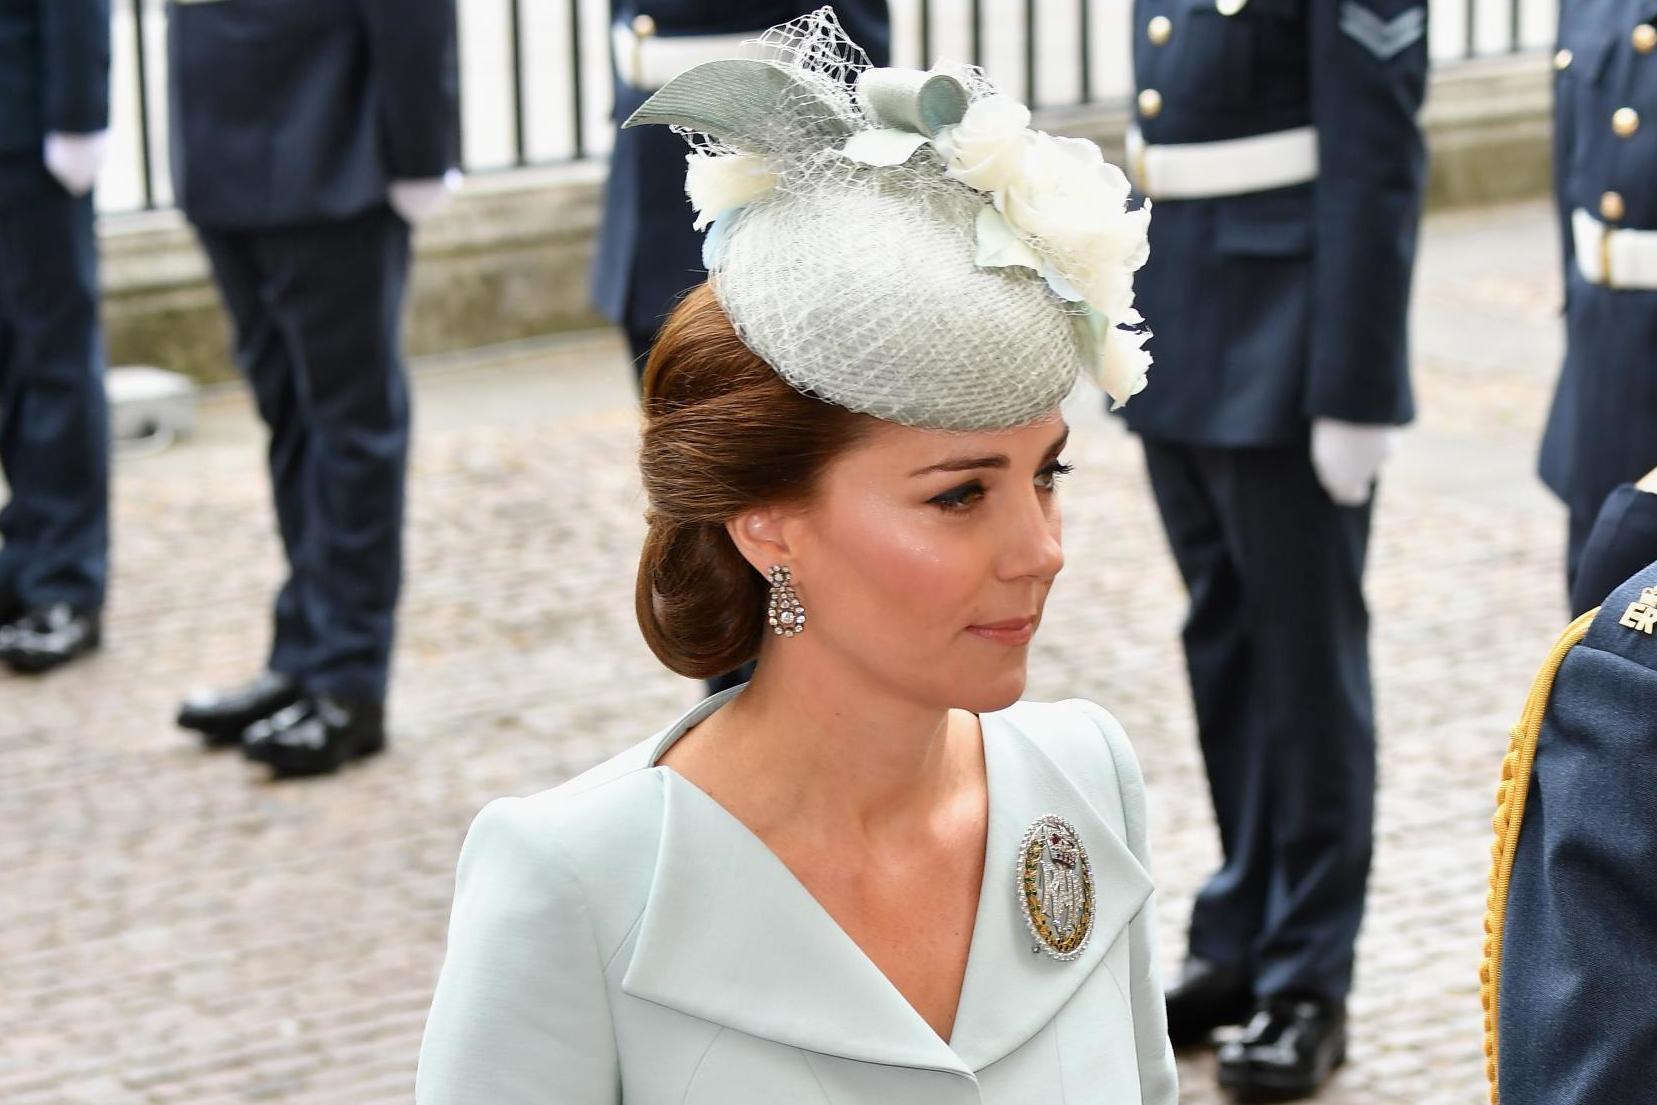 The Duchess of Cambridge often wears a hairnet